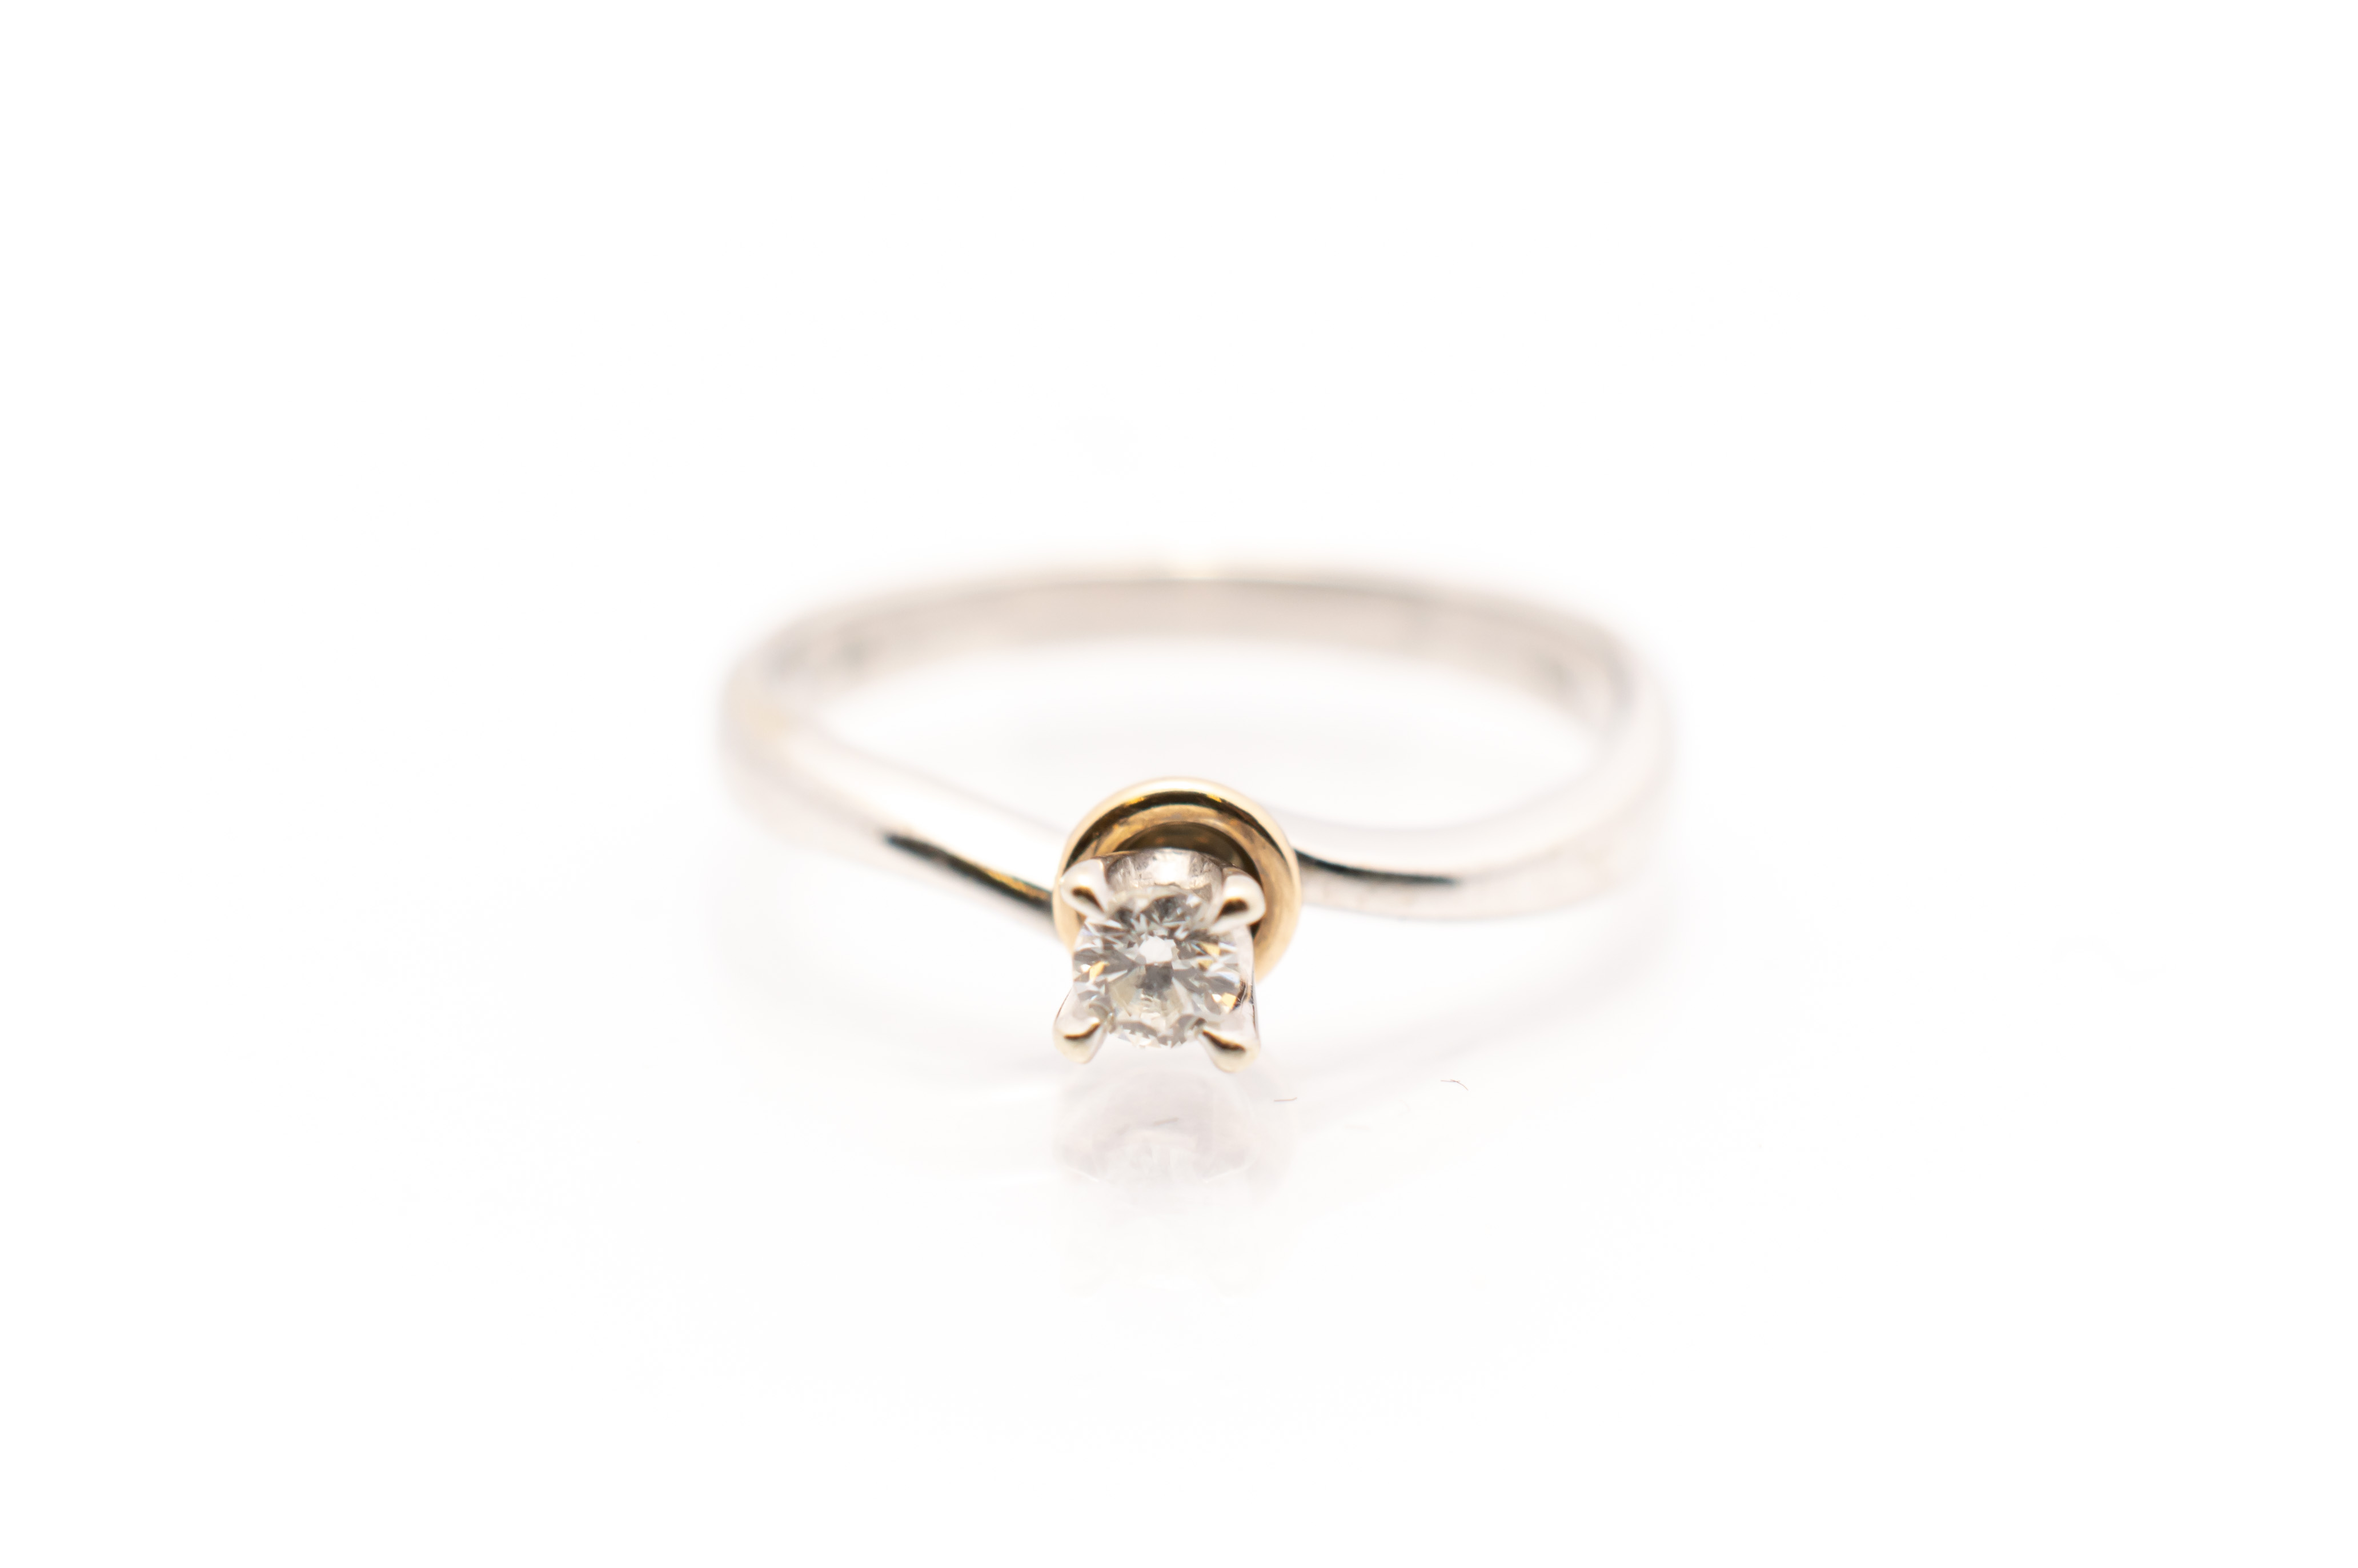 Prsten z bílého zlata s diamantem, vel. 51